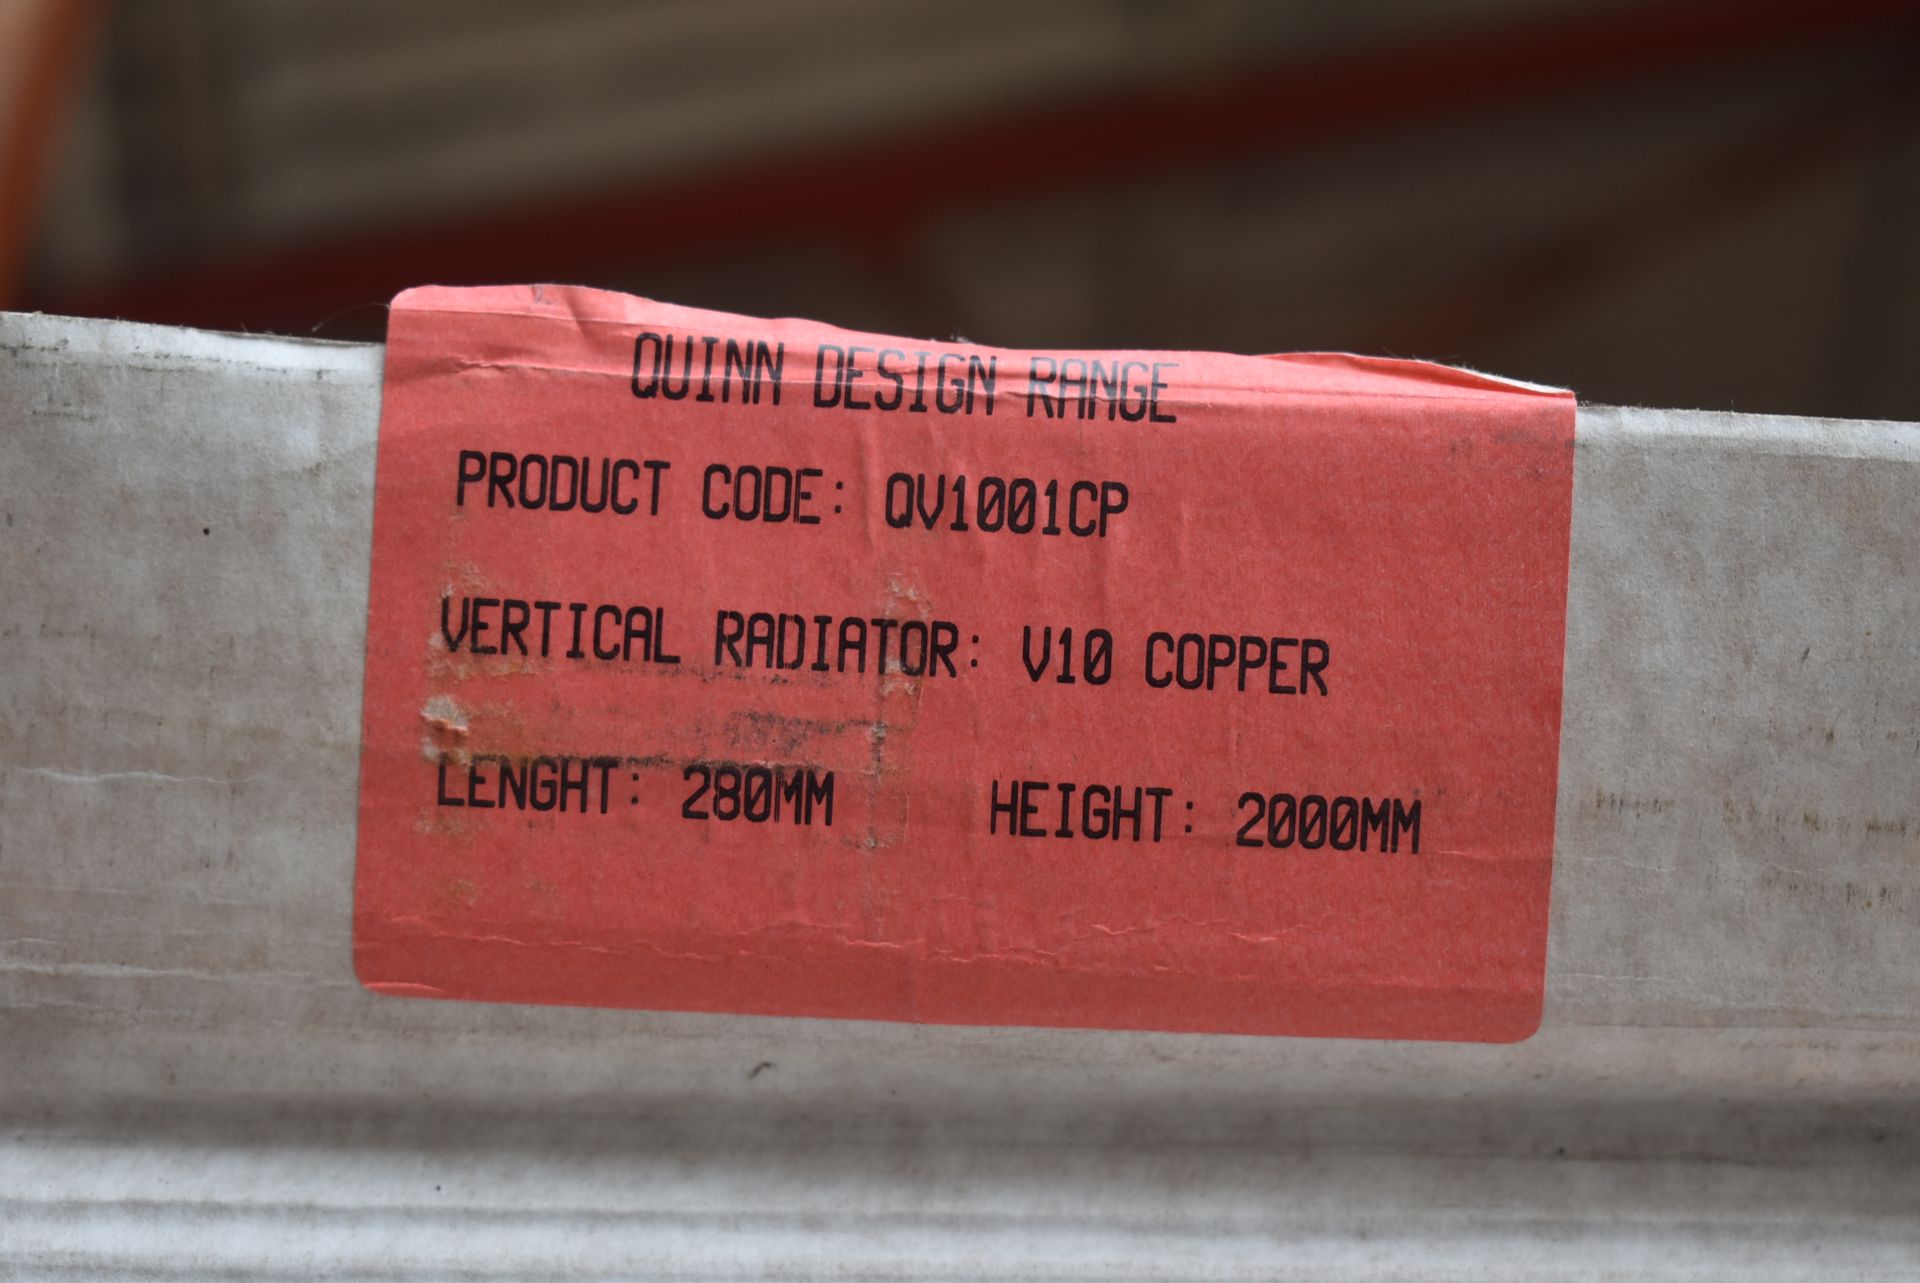 1 x Quinn Single Panel Vertical Radiator in Victorian Copper - Contemporary Design - BTU 4944 - 1449 - Image 2 of 5